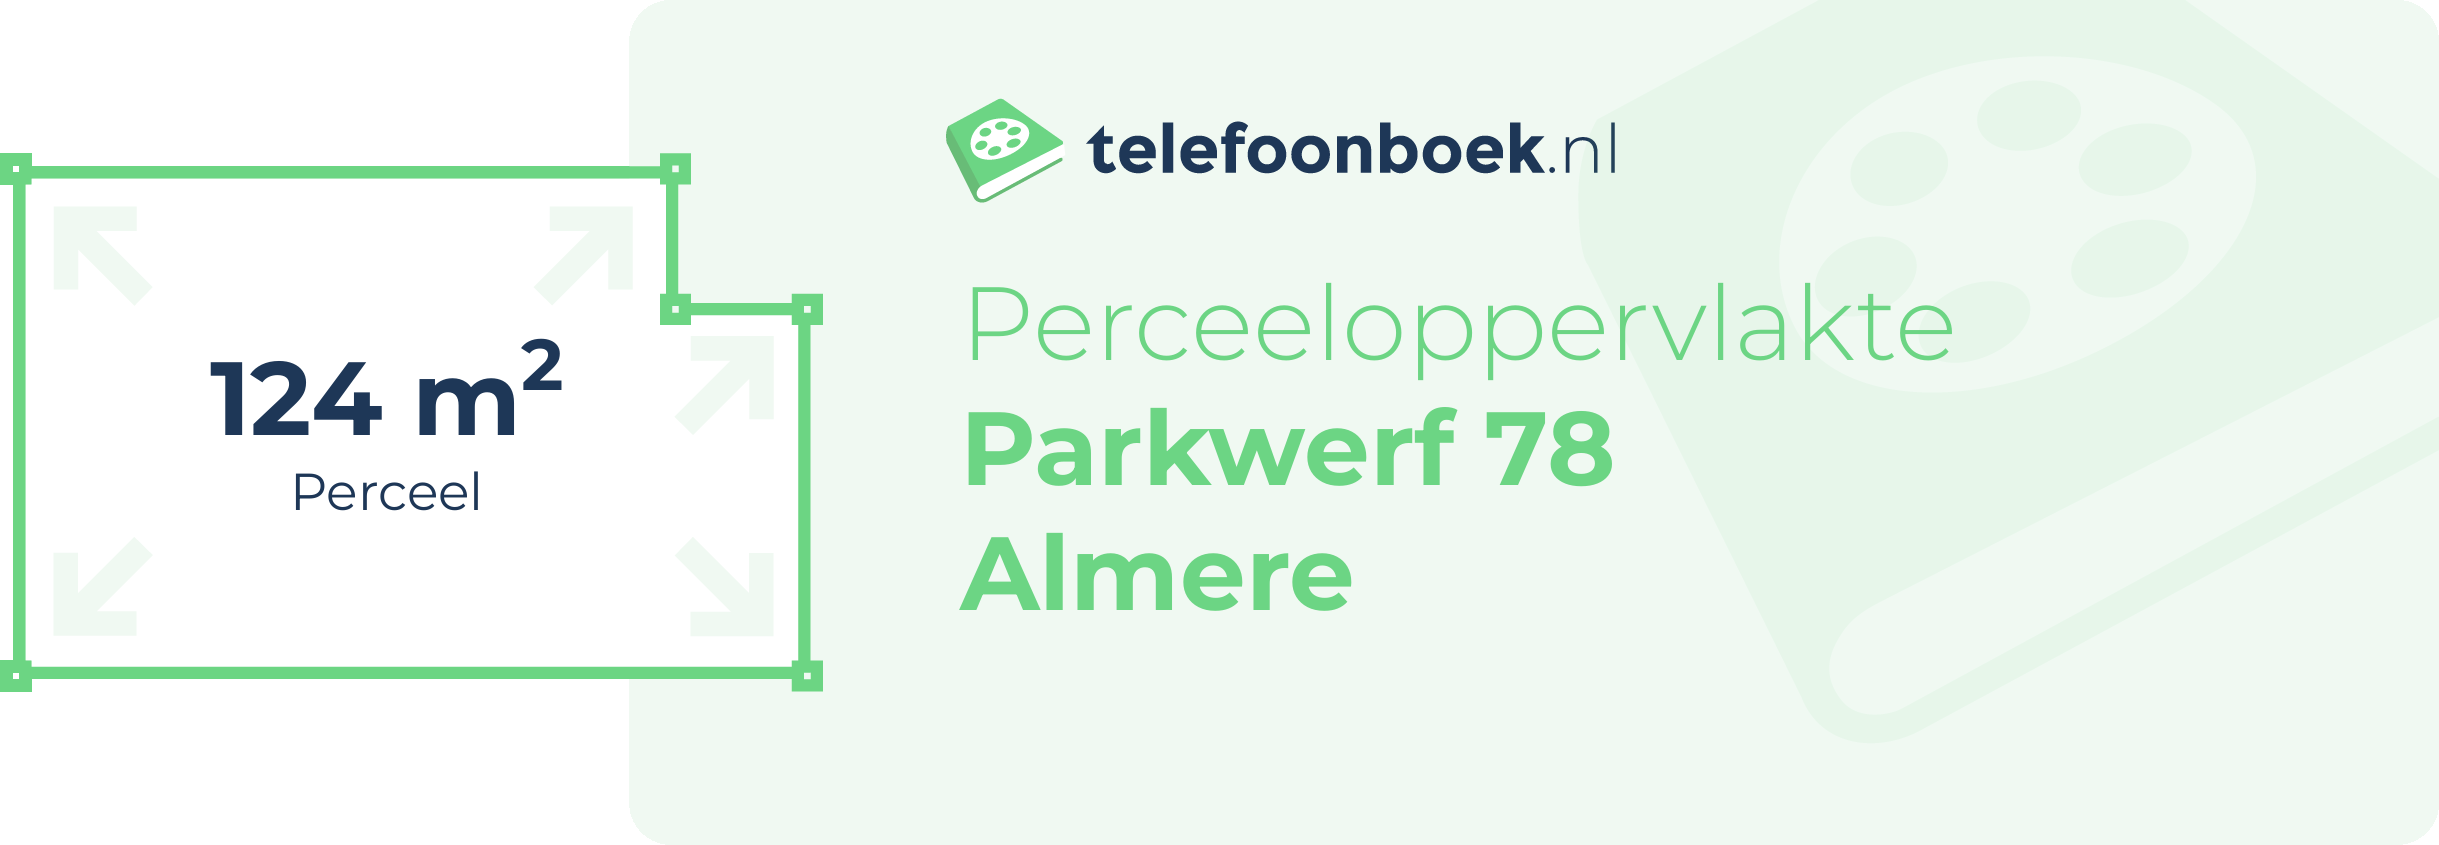 Perceeloppervlakte Parkwerf 78 Almere